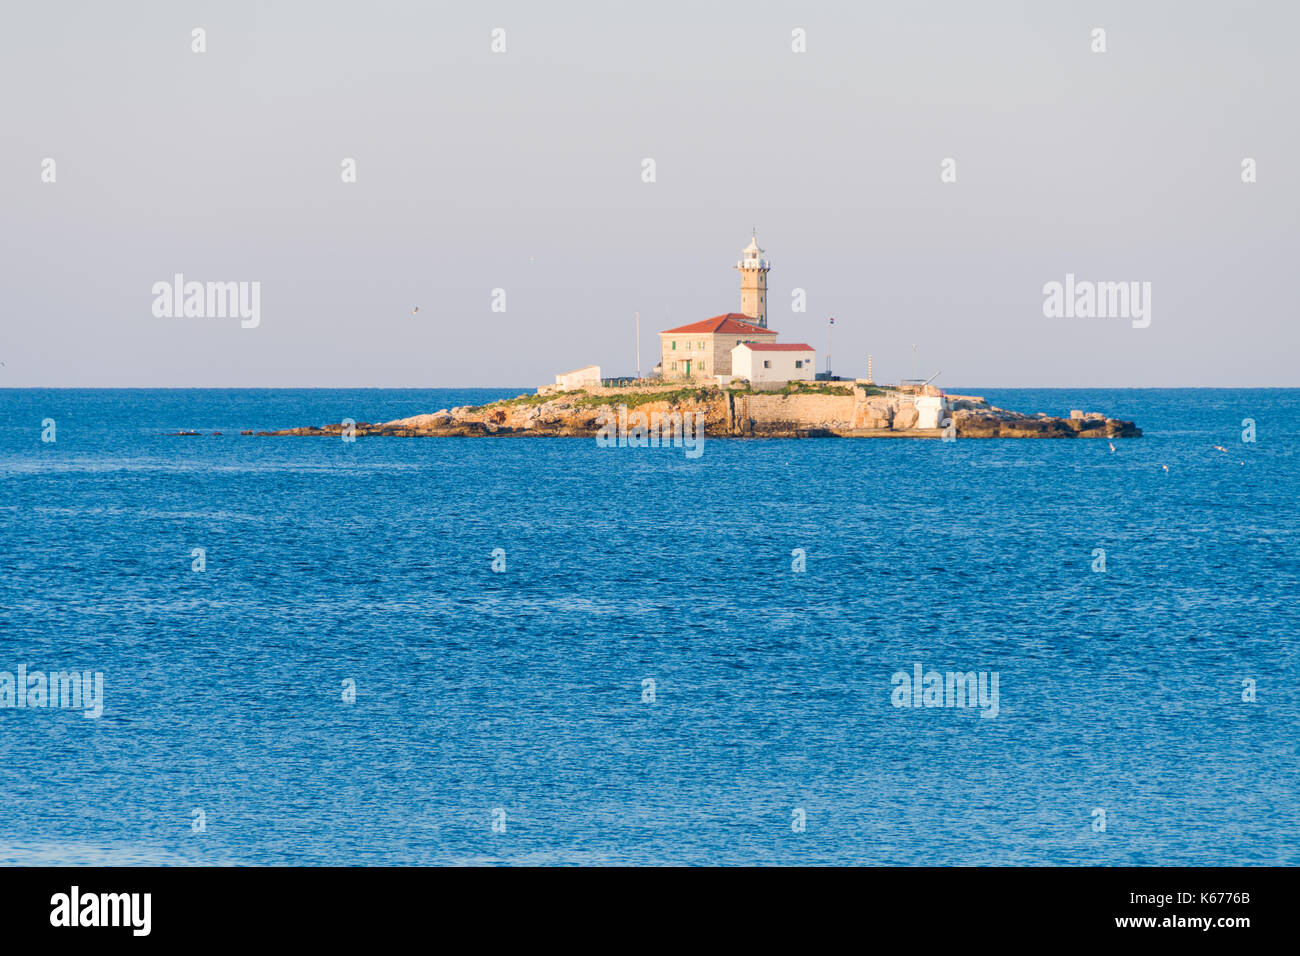 Lighthouse on a small island Sveti Ivan near Rovinj, Croatia Stock Photo